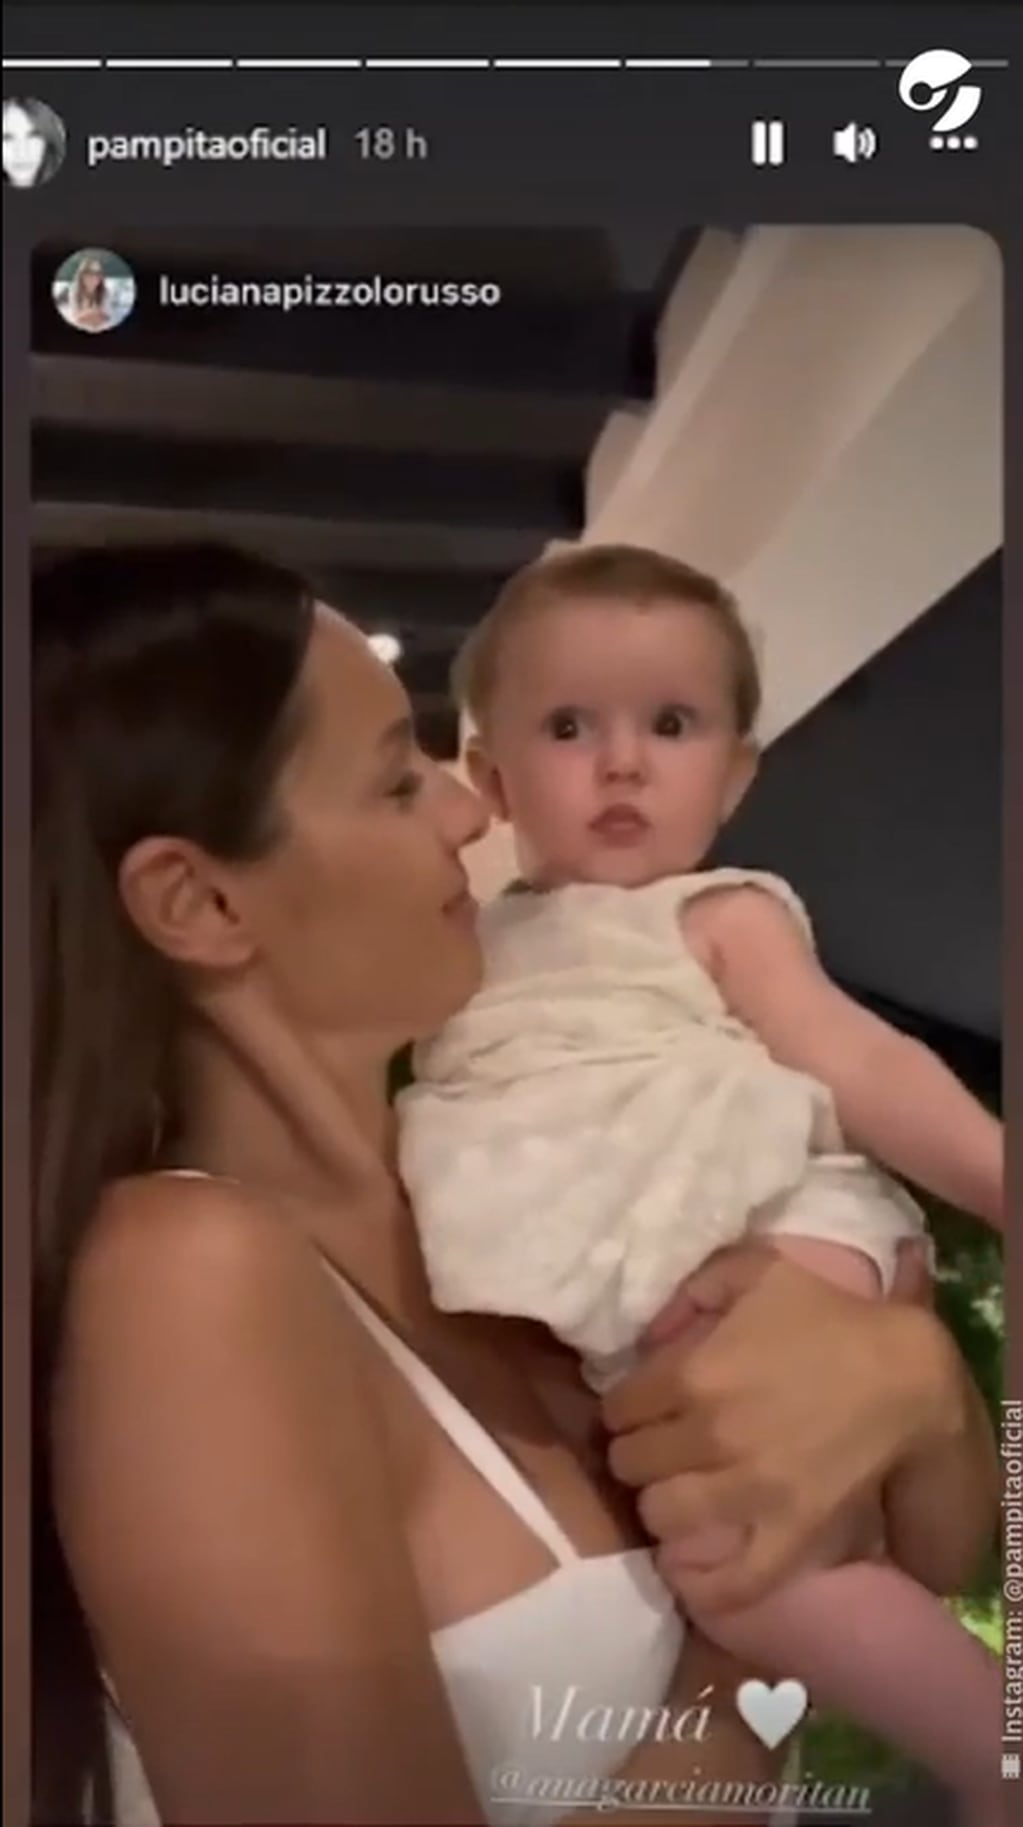 Ana la bebé de Pampita dijo mamá por primera vez.